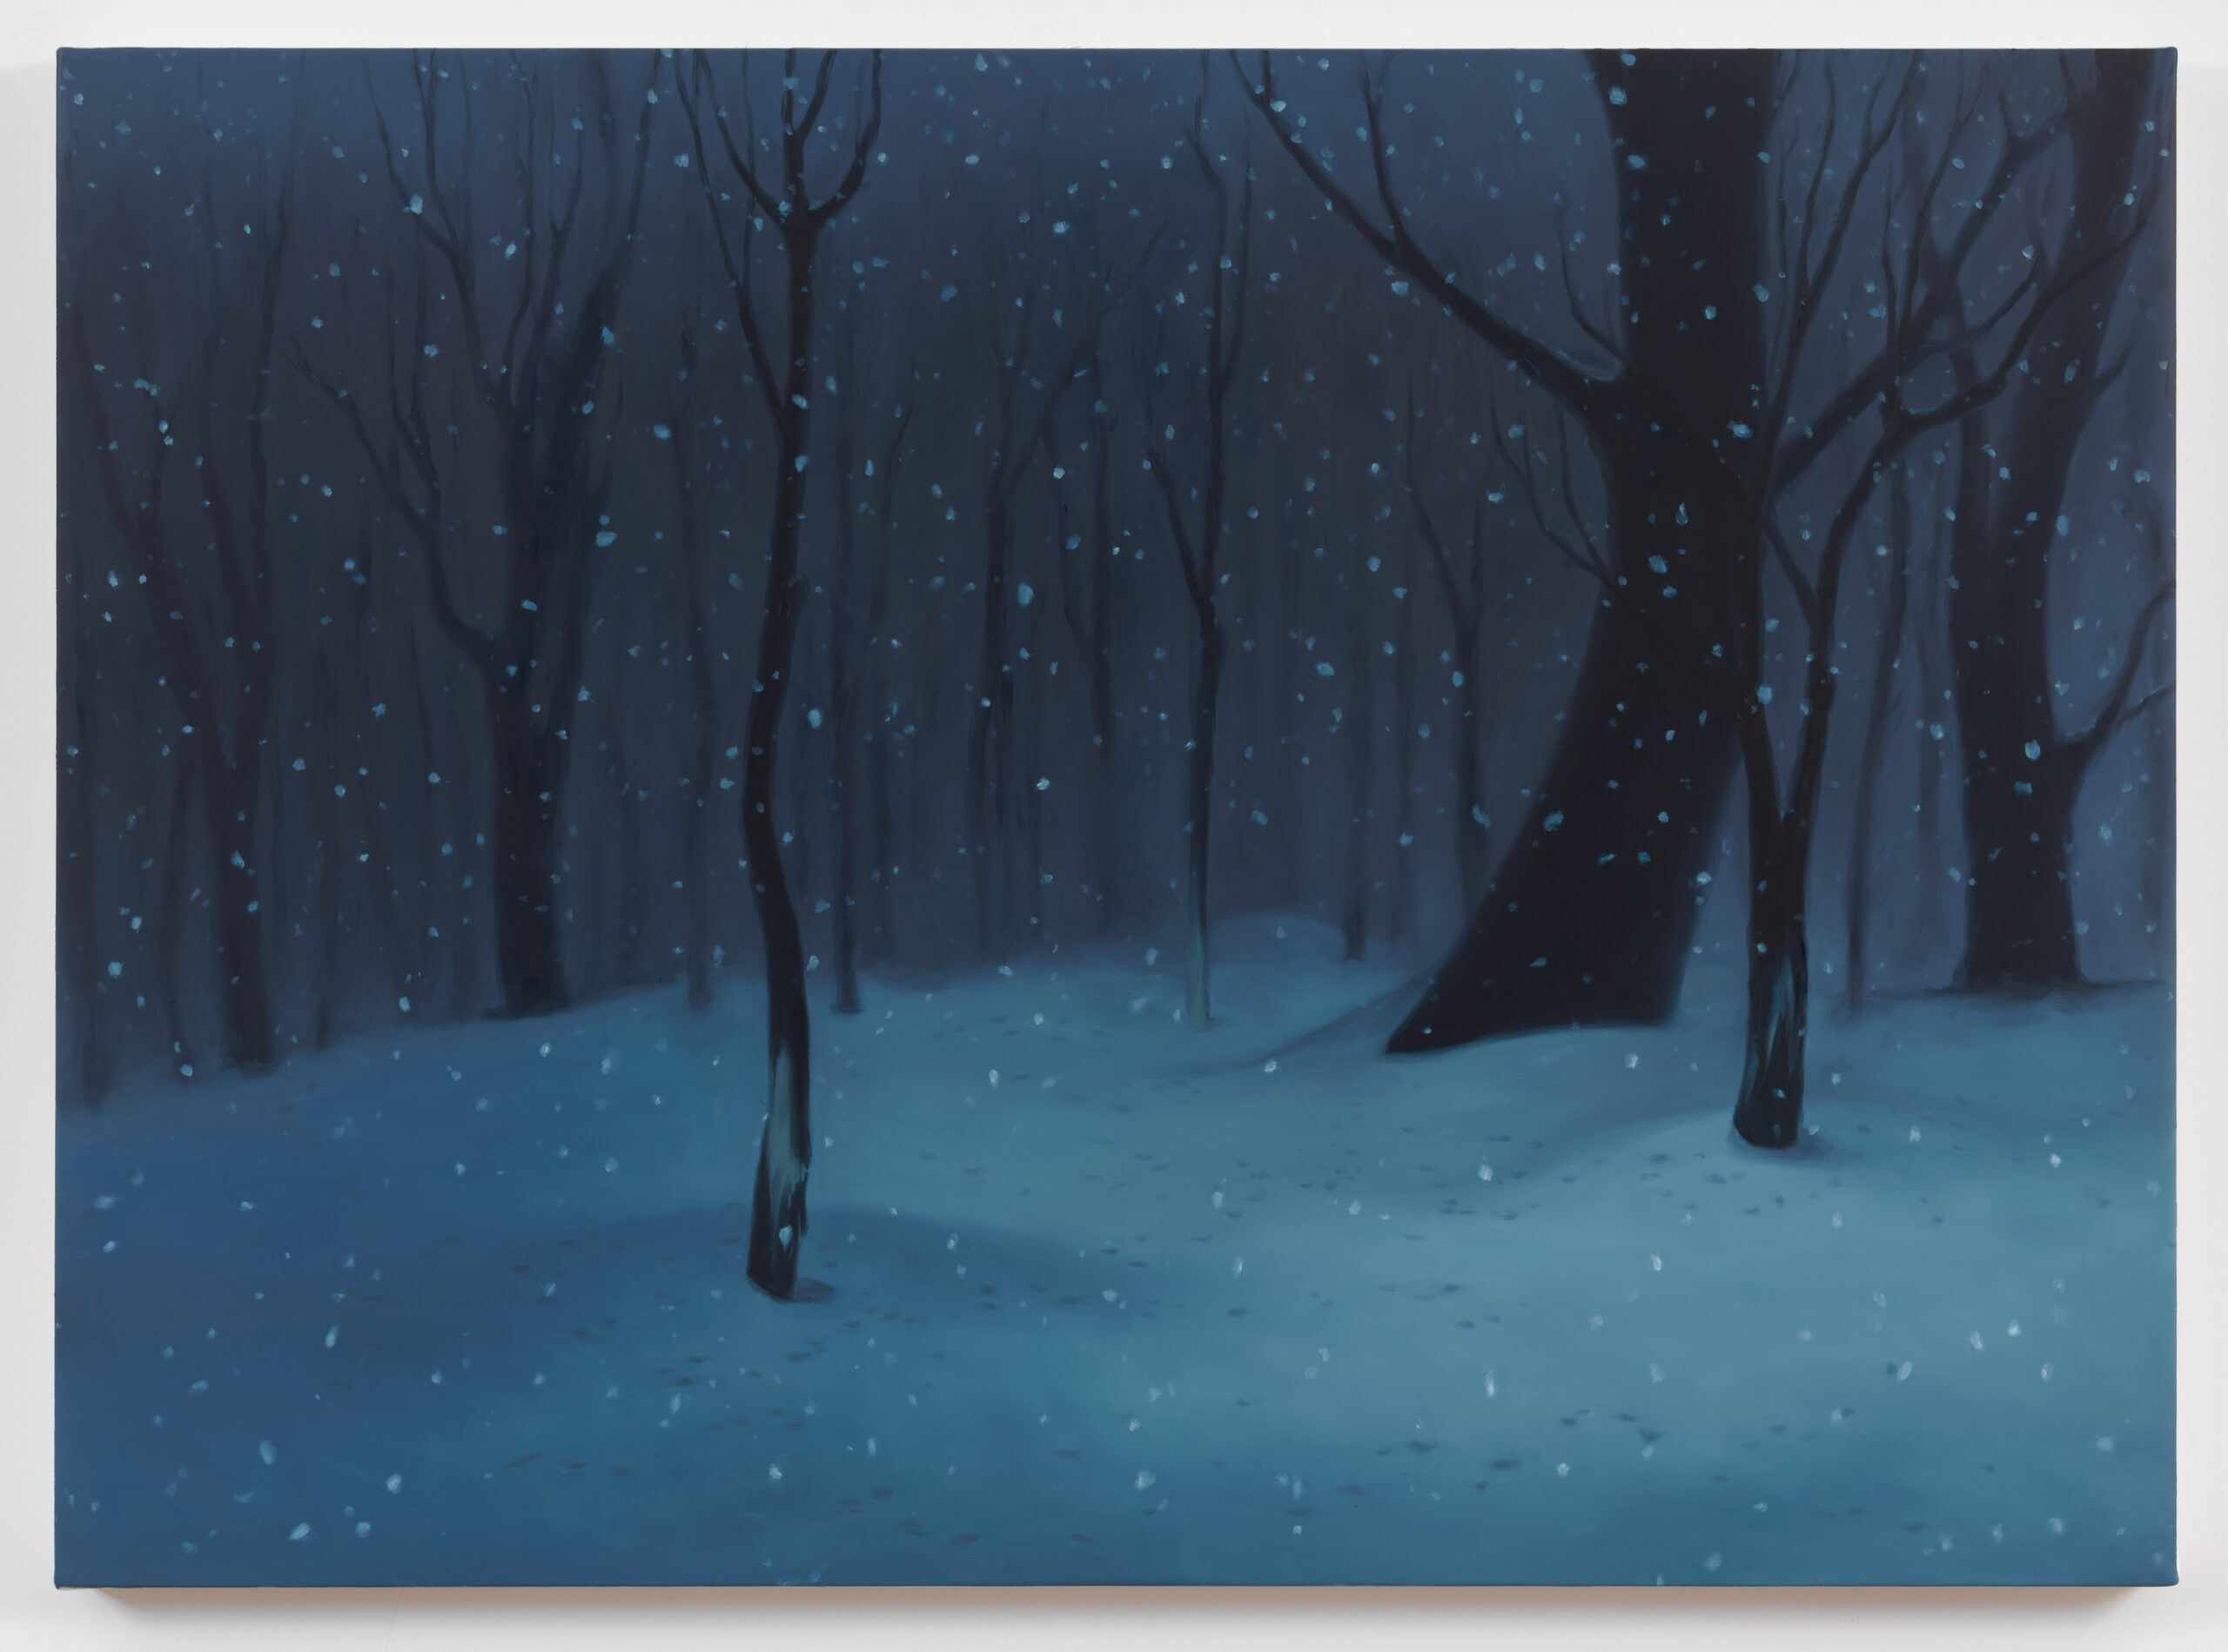 Dan Colen
Mother (Snow), 2023
Oil on canvas
26 x 36 inches (66 x 91.4 cm)
© Dan Colen
Photo: Rob McKeever
Courtesy Gagosian